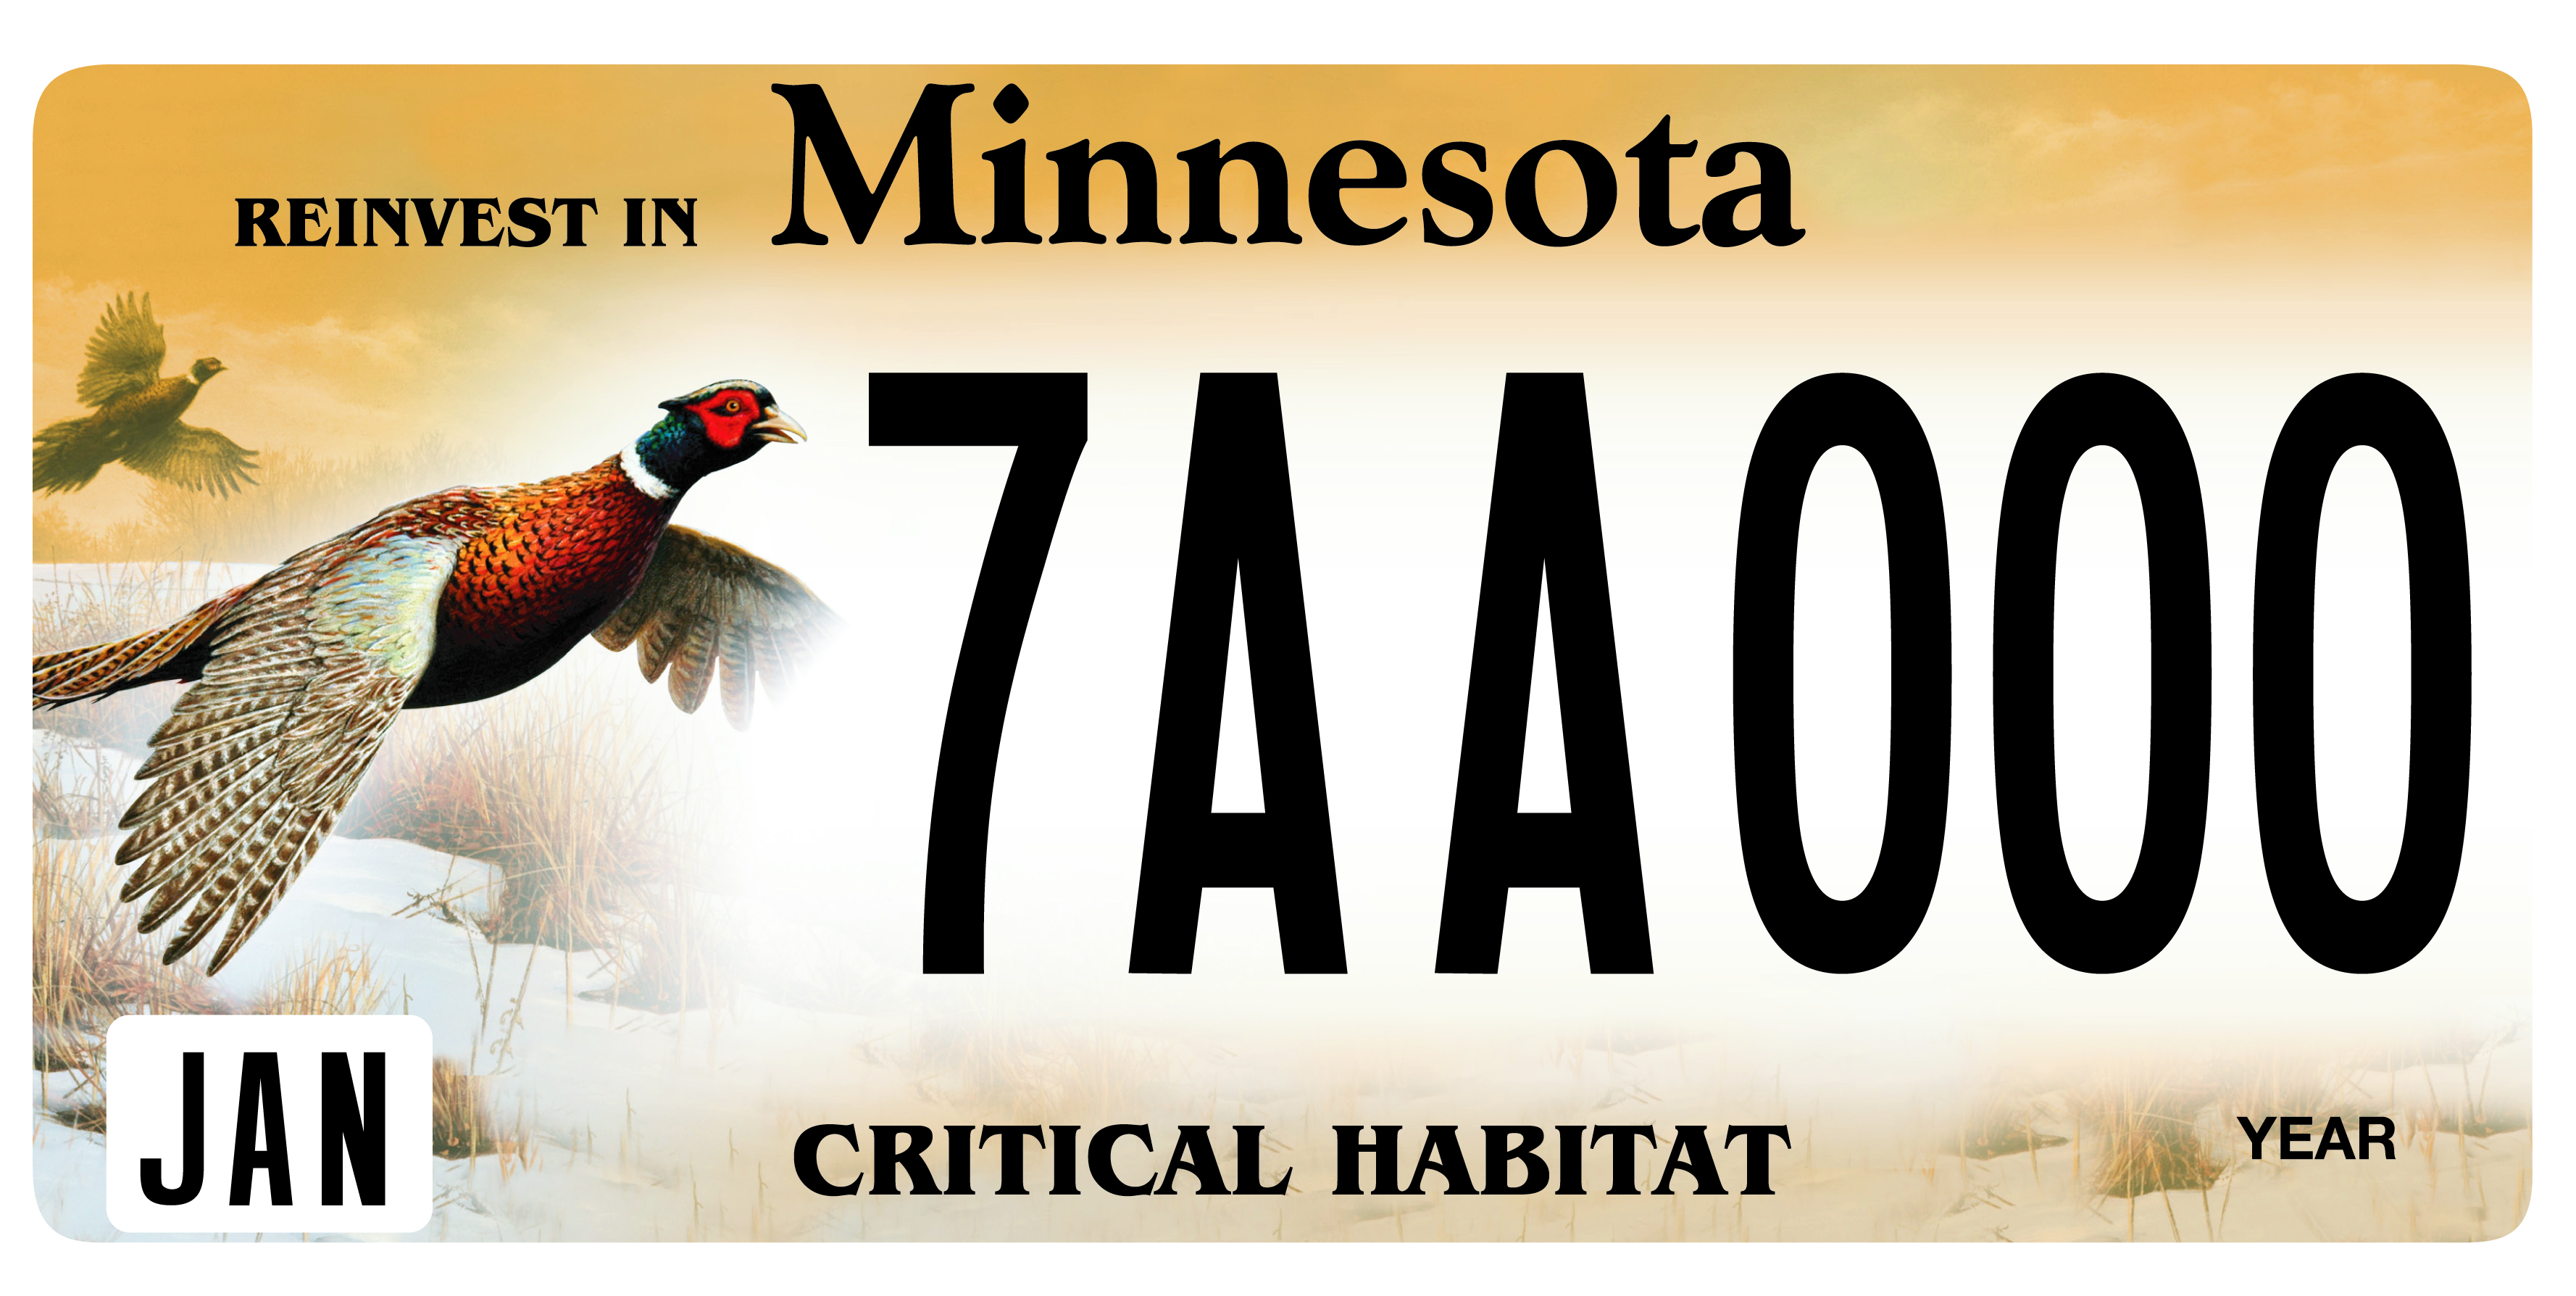 Pheasant Critical Habitat License Plate image